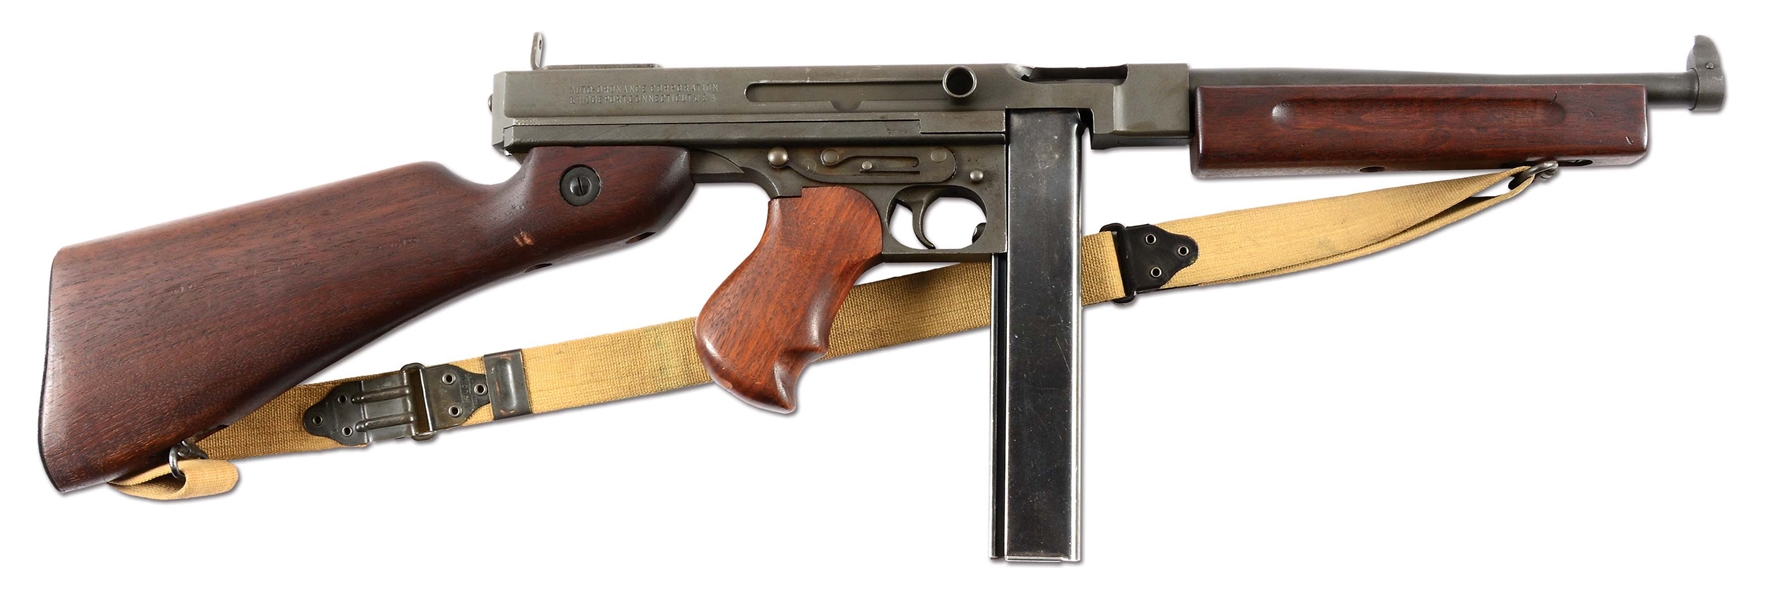 (N) ATTRACTIVE ARSENAL REFINISHED RARE M1 MODEL THOMPSON MACHINE GUN FROM WORLD WAR II ERA (CURIO AND RELIC).